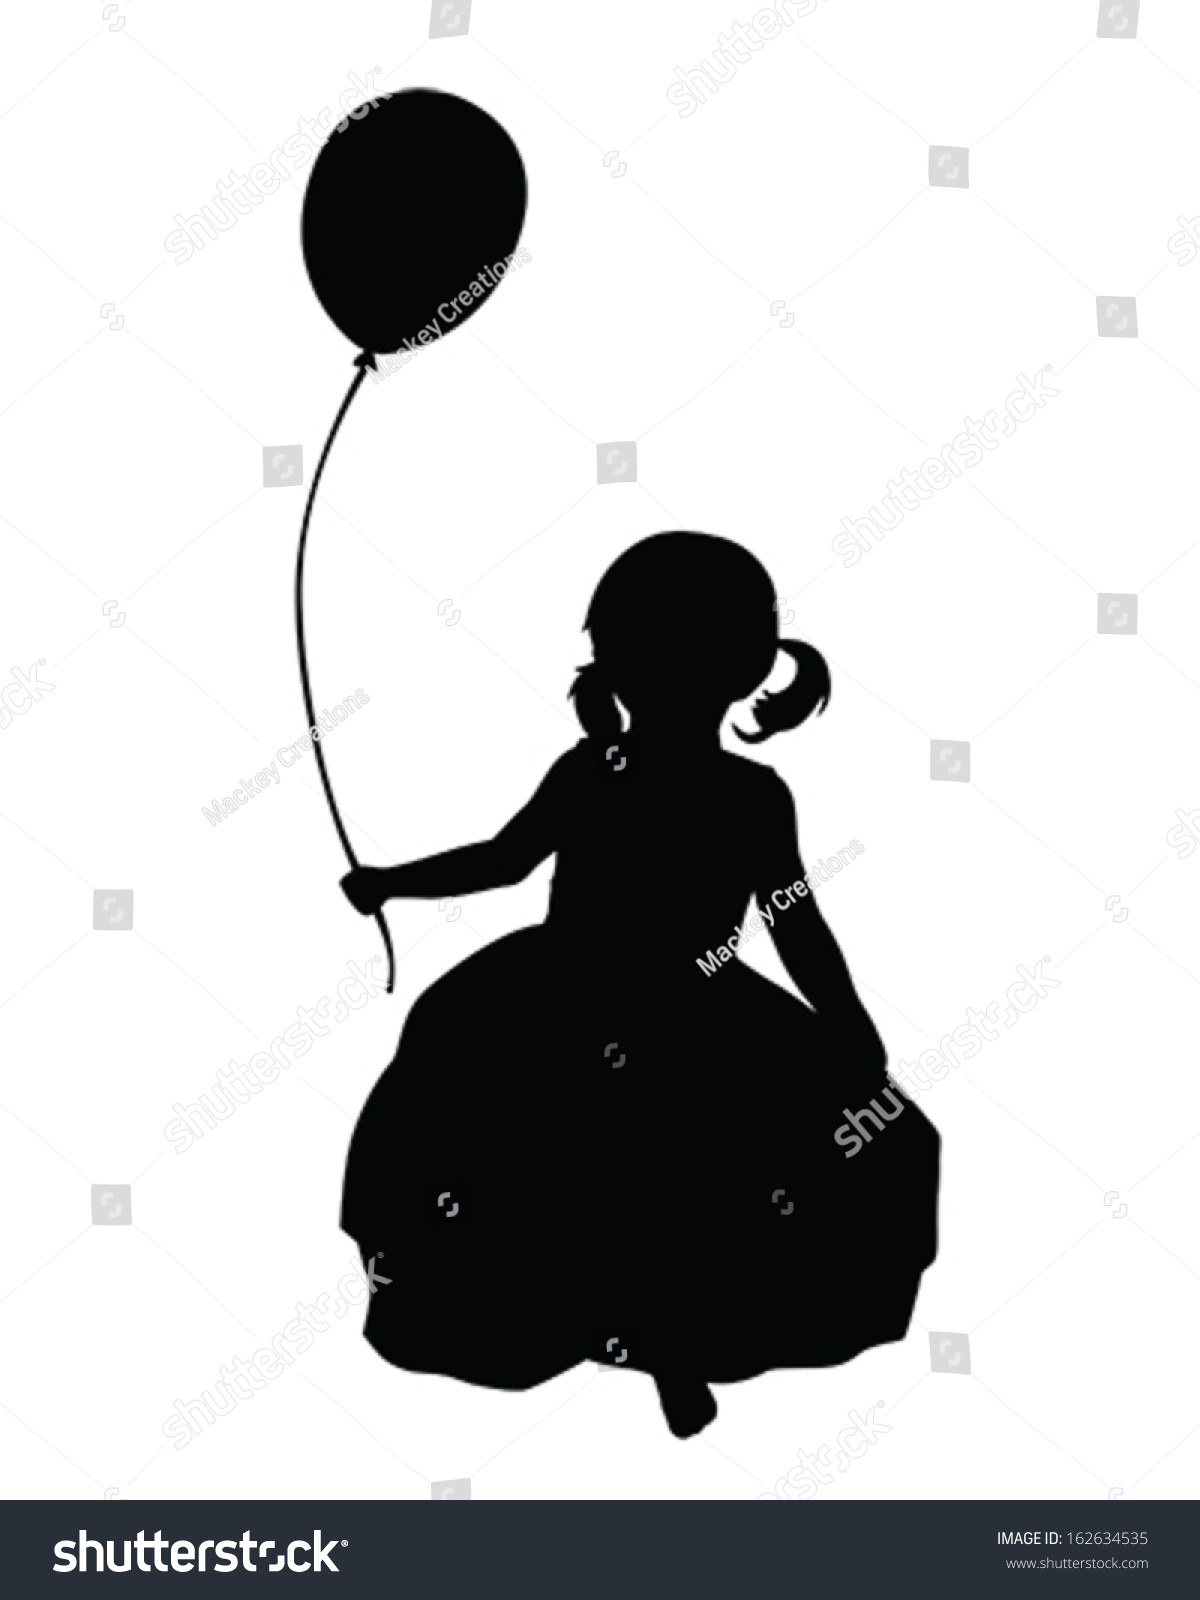 Vector Silhouette Of A Little Girl Holding A Balloon - 162634535 ...